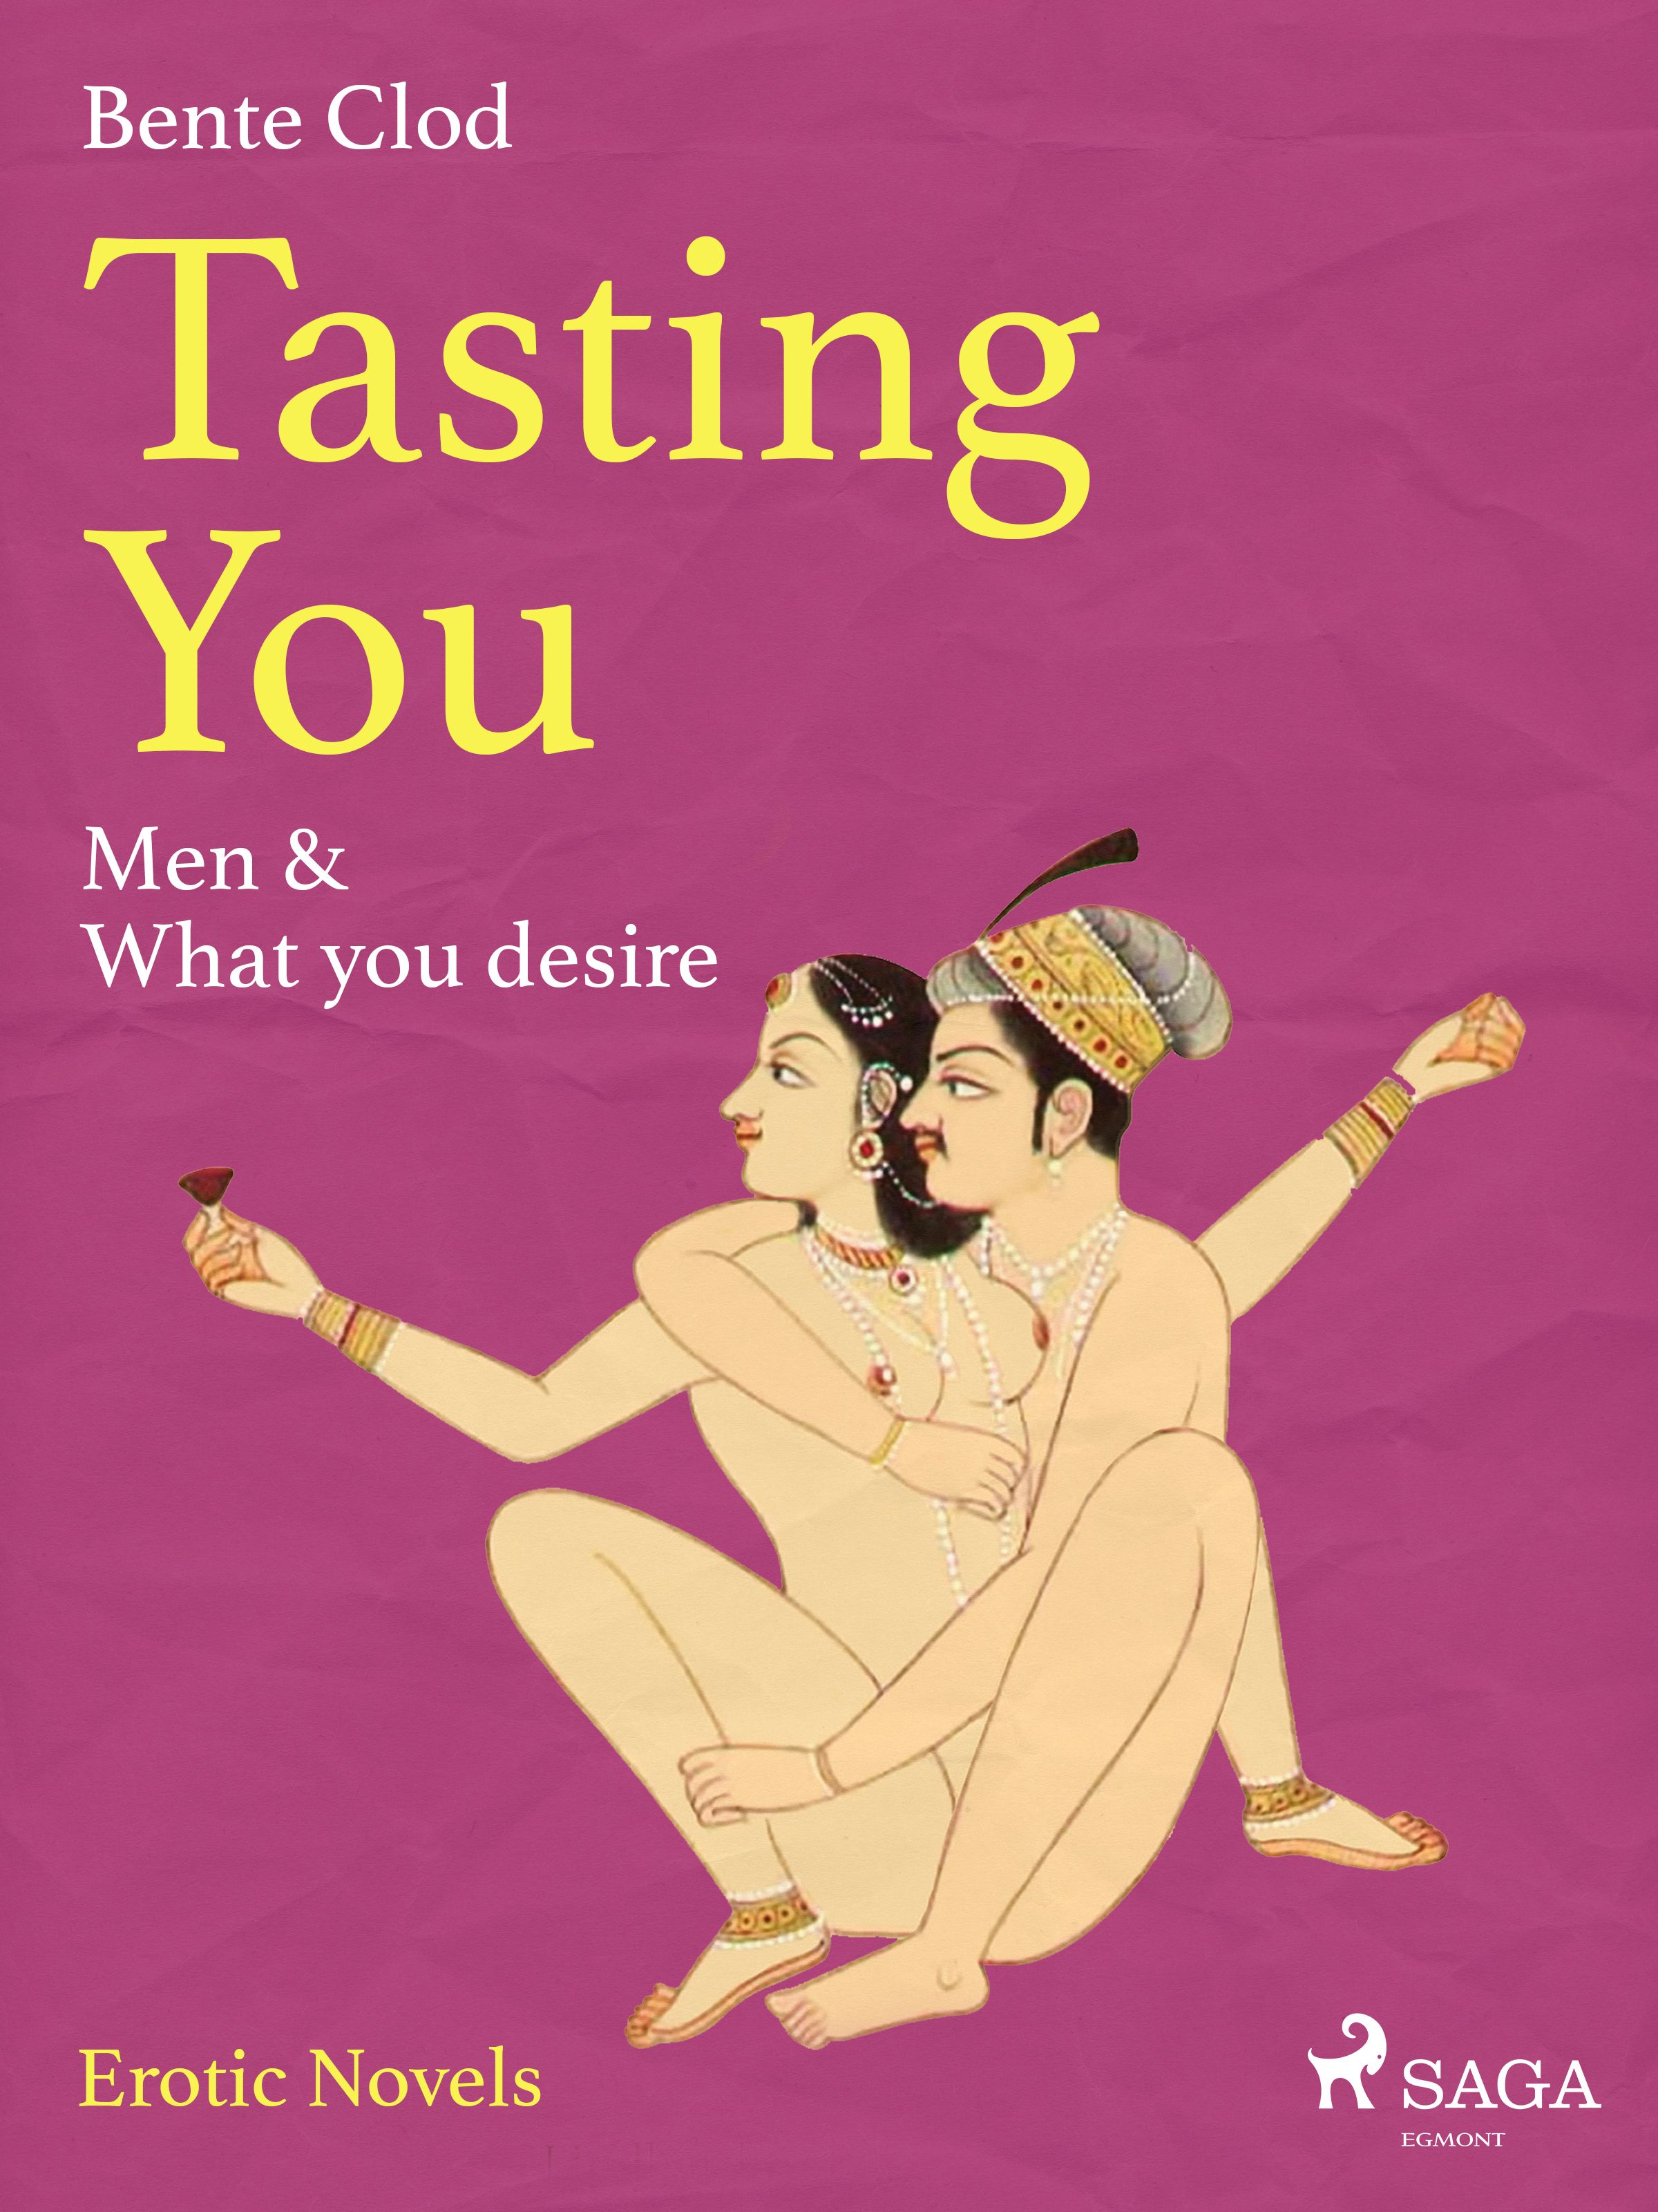 Tasting You: Men & What you desire, eBook by Bente Clod